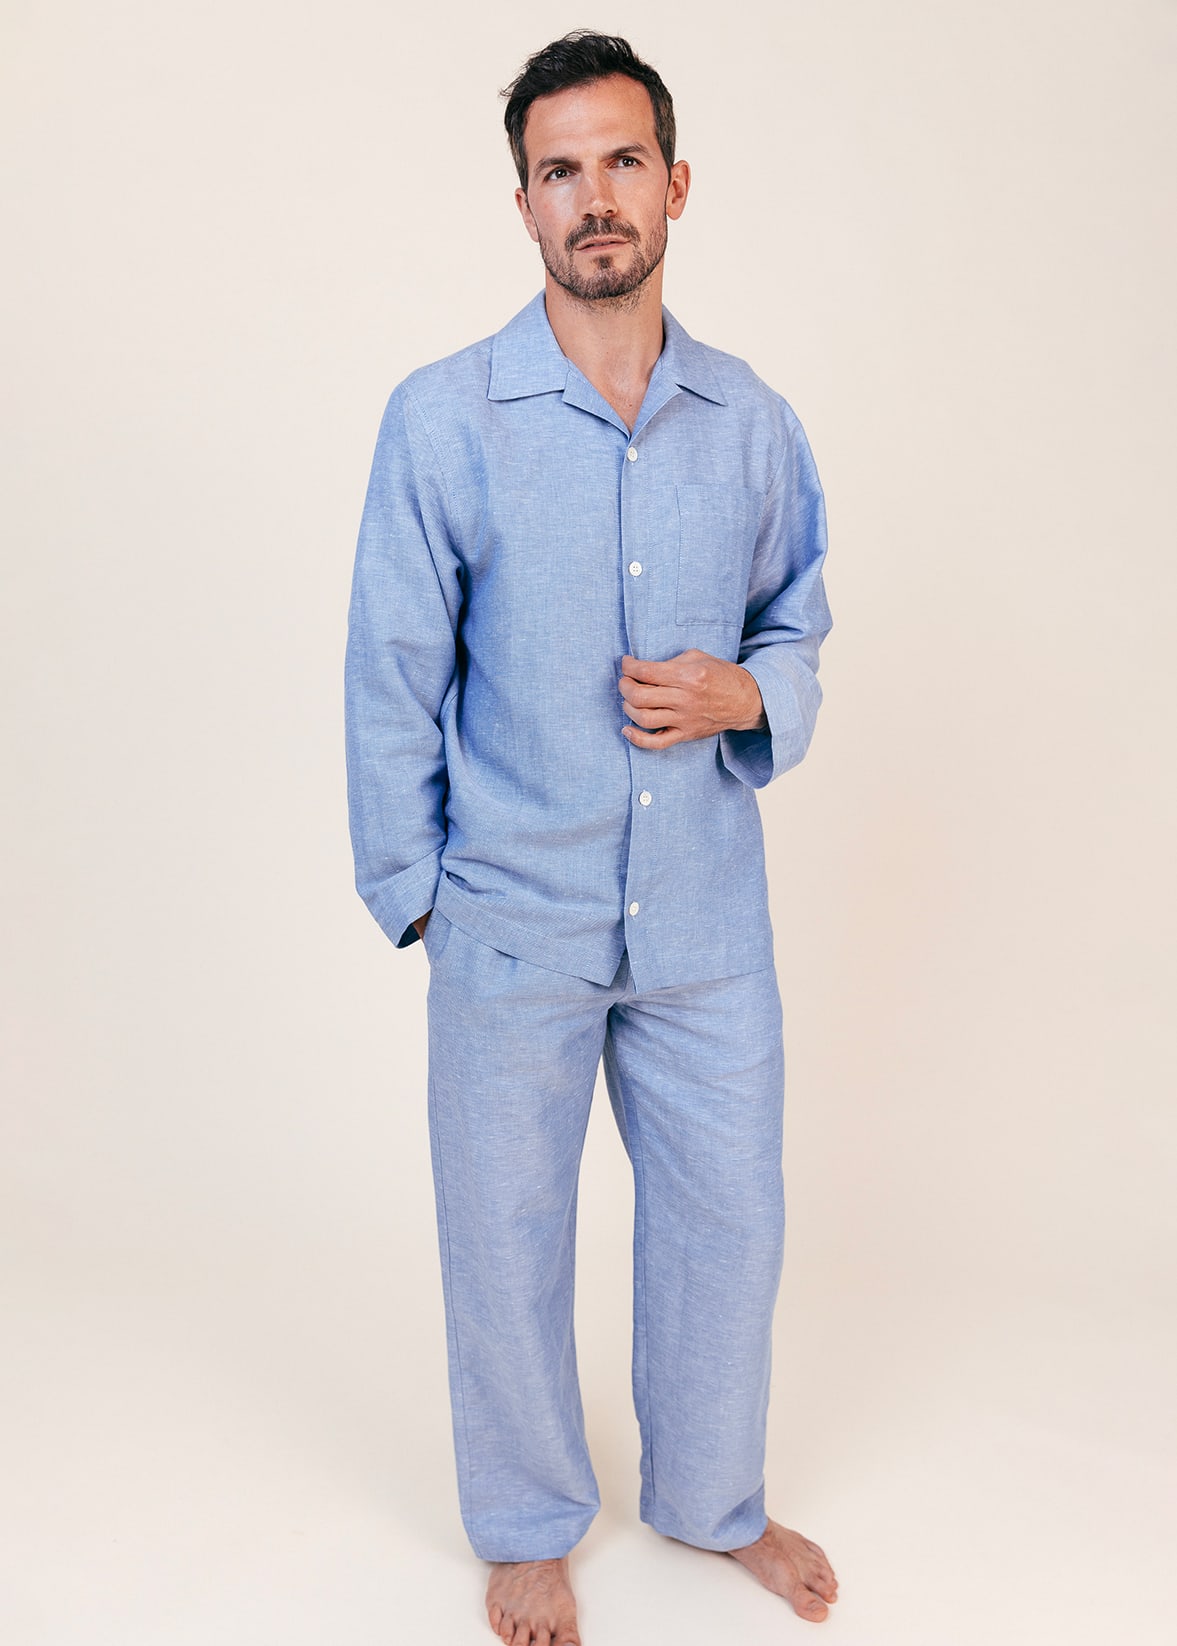 Men's Linen & Cotton Blend Pyjamas, Plain Blue, Made in UK